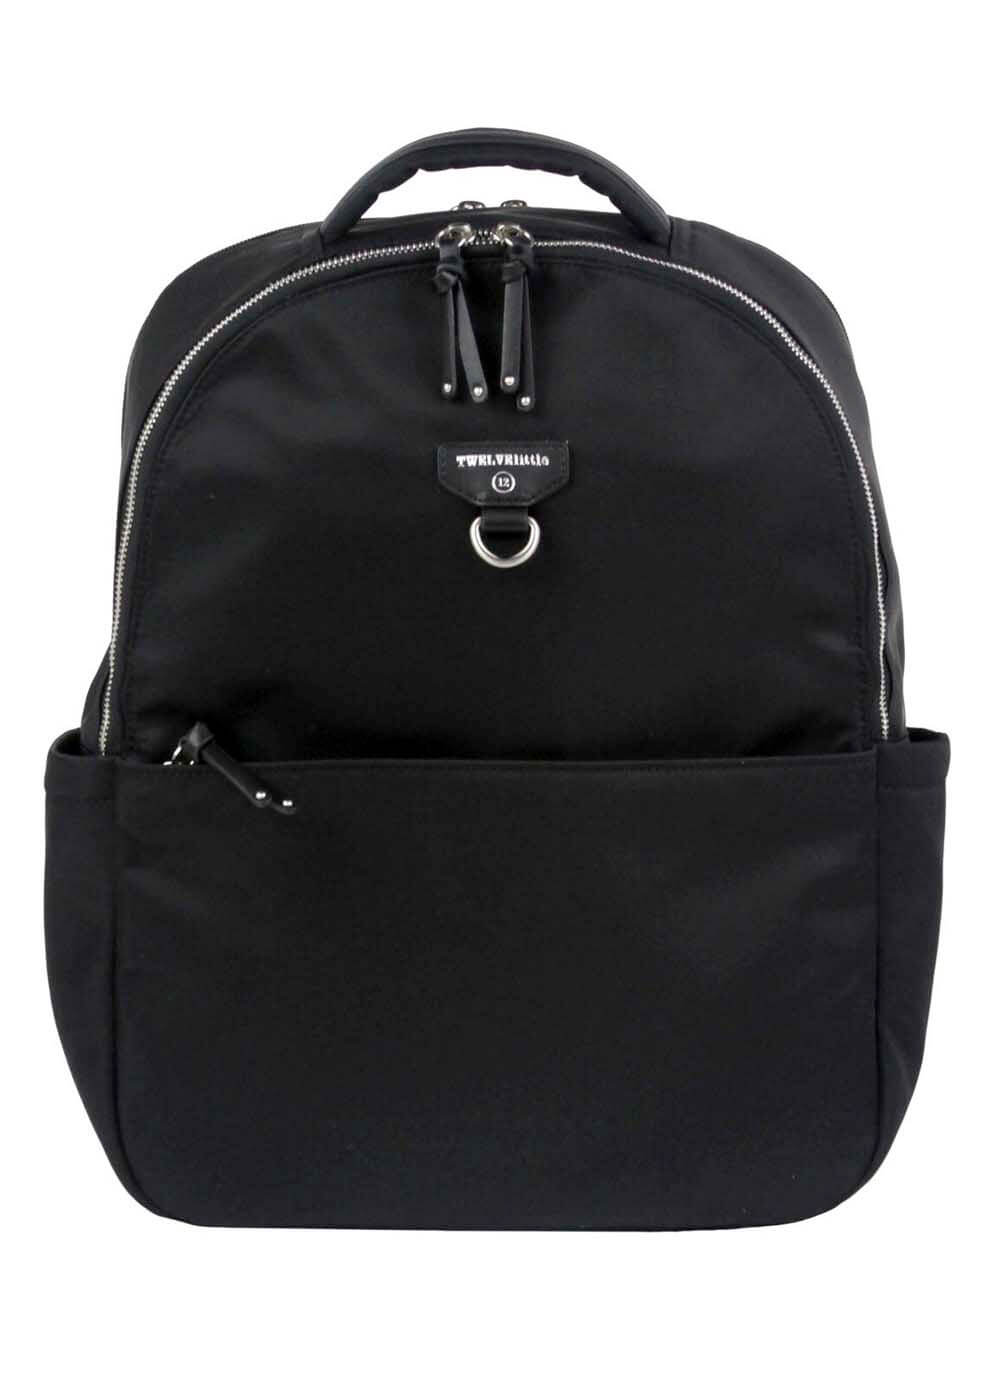 TWELVE little - On-The-Go Backpack in Black - ON SALE